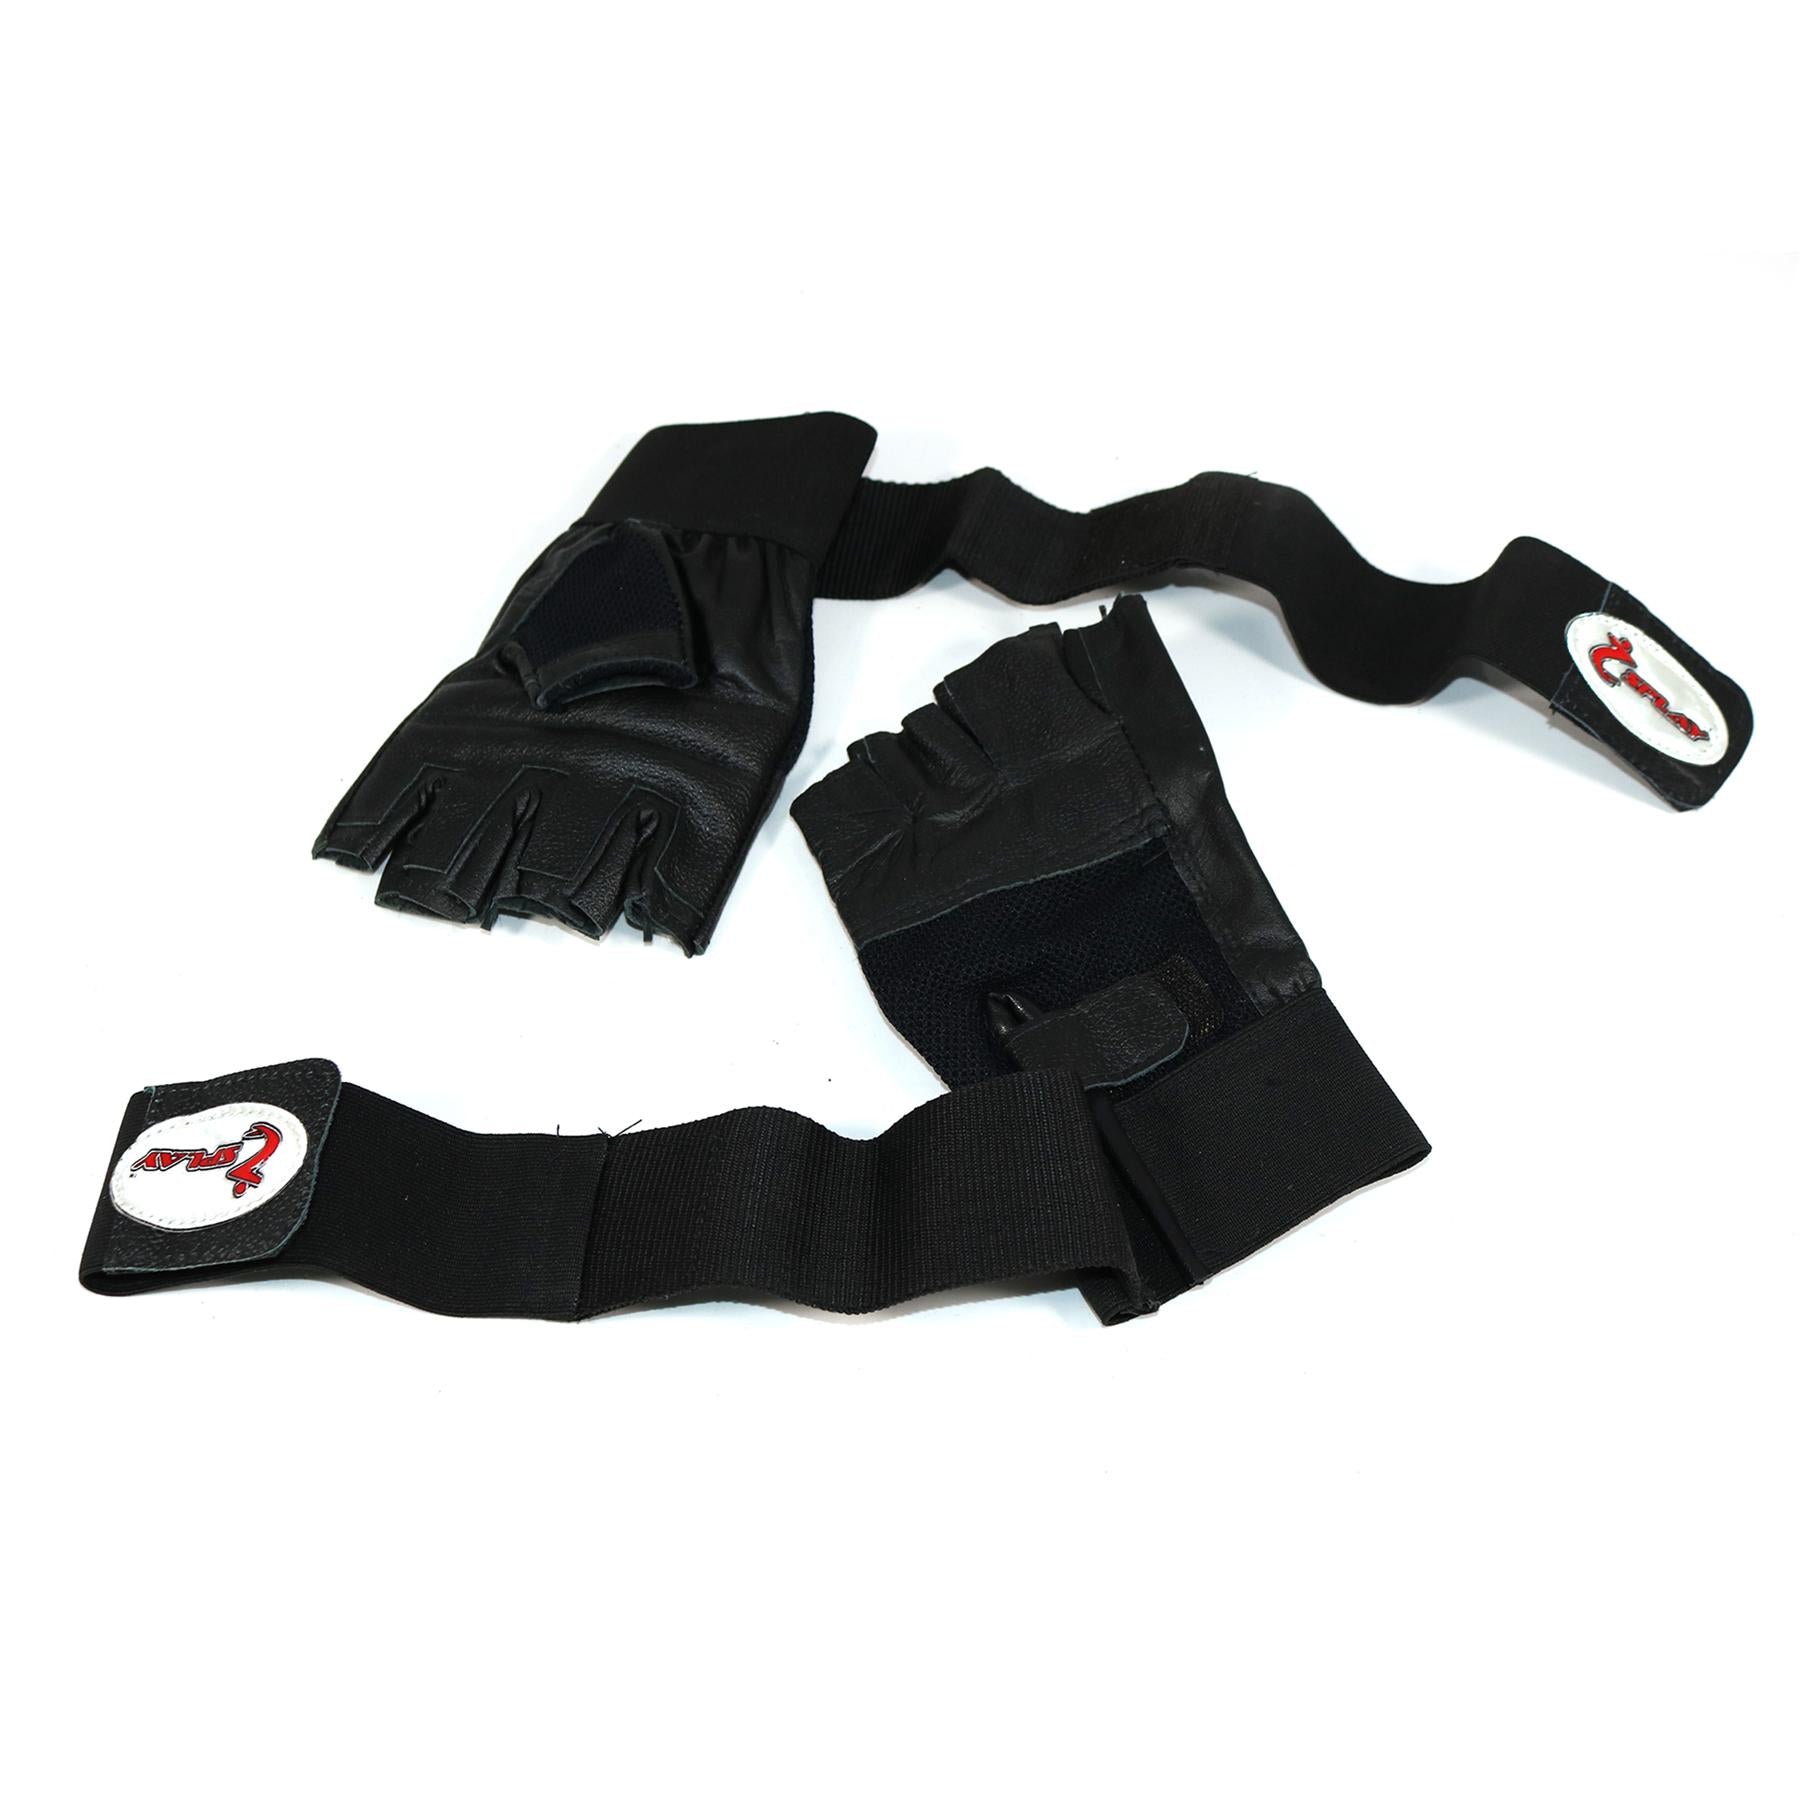 Buy Splay Classic Gym Gloves-Splay (UK) Limited-Splay UK Online